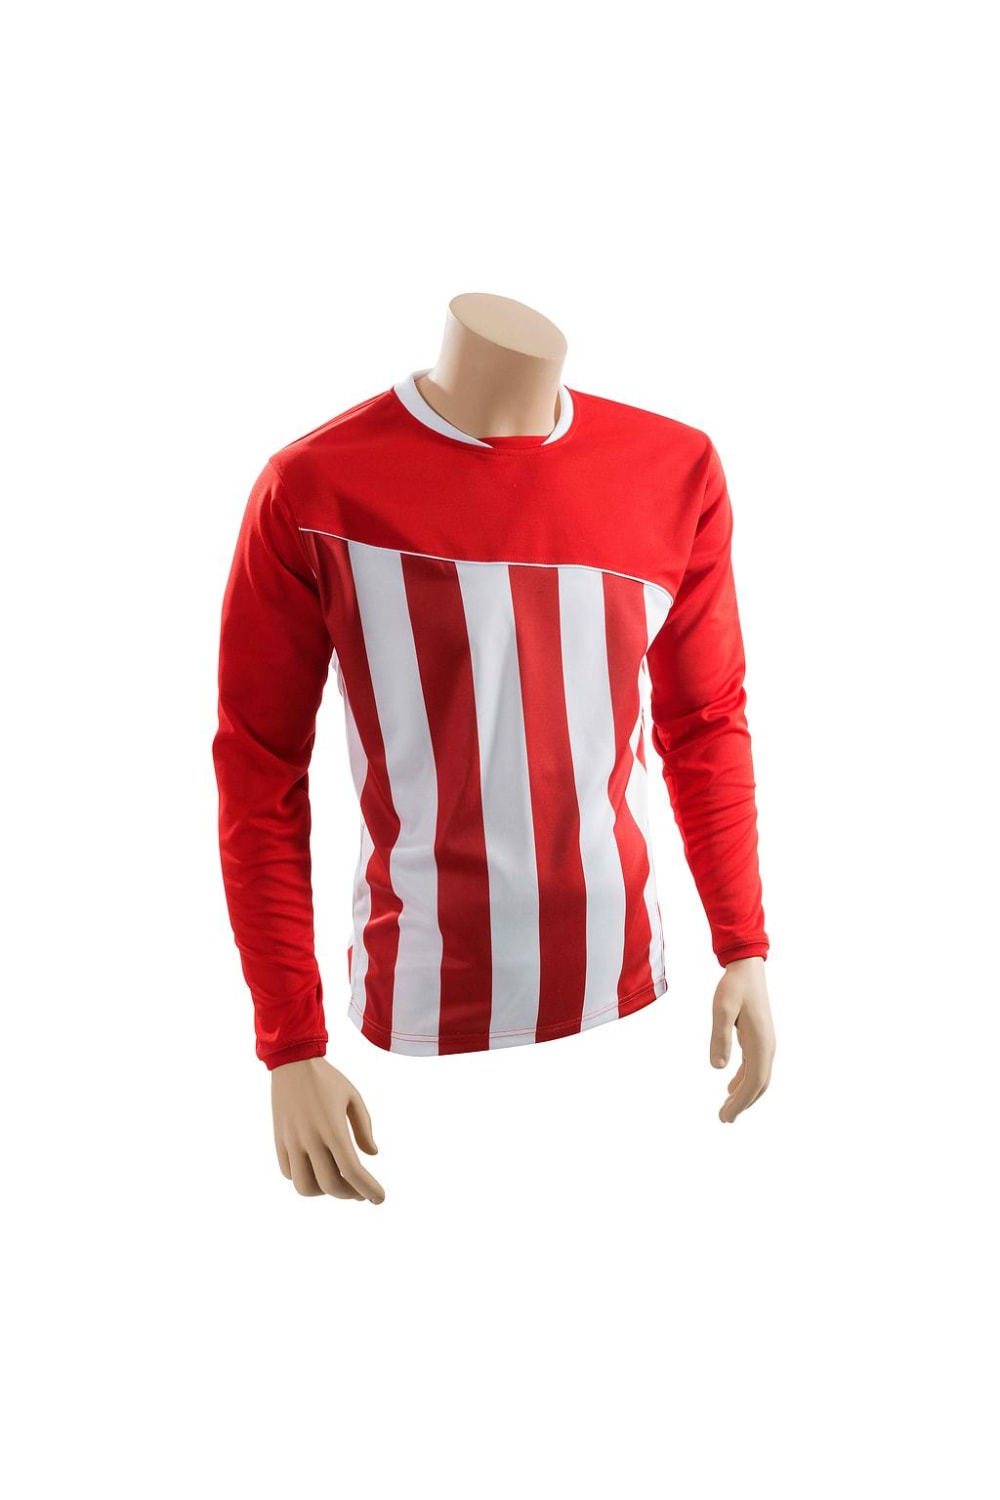 Precision Unisex Adult Valencia Football Shirt (Red/White)